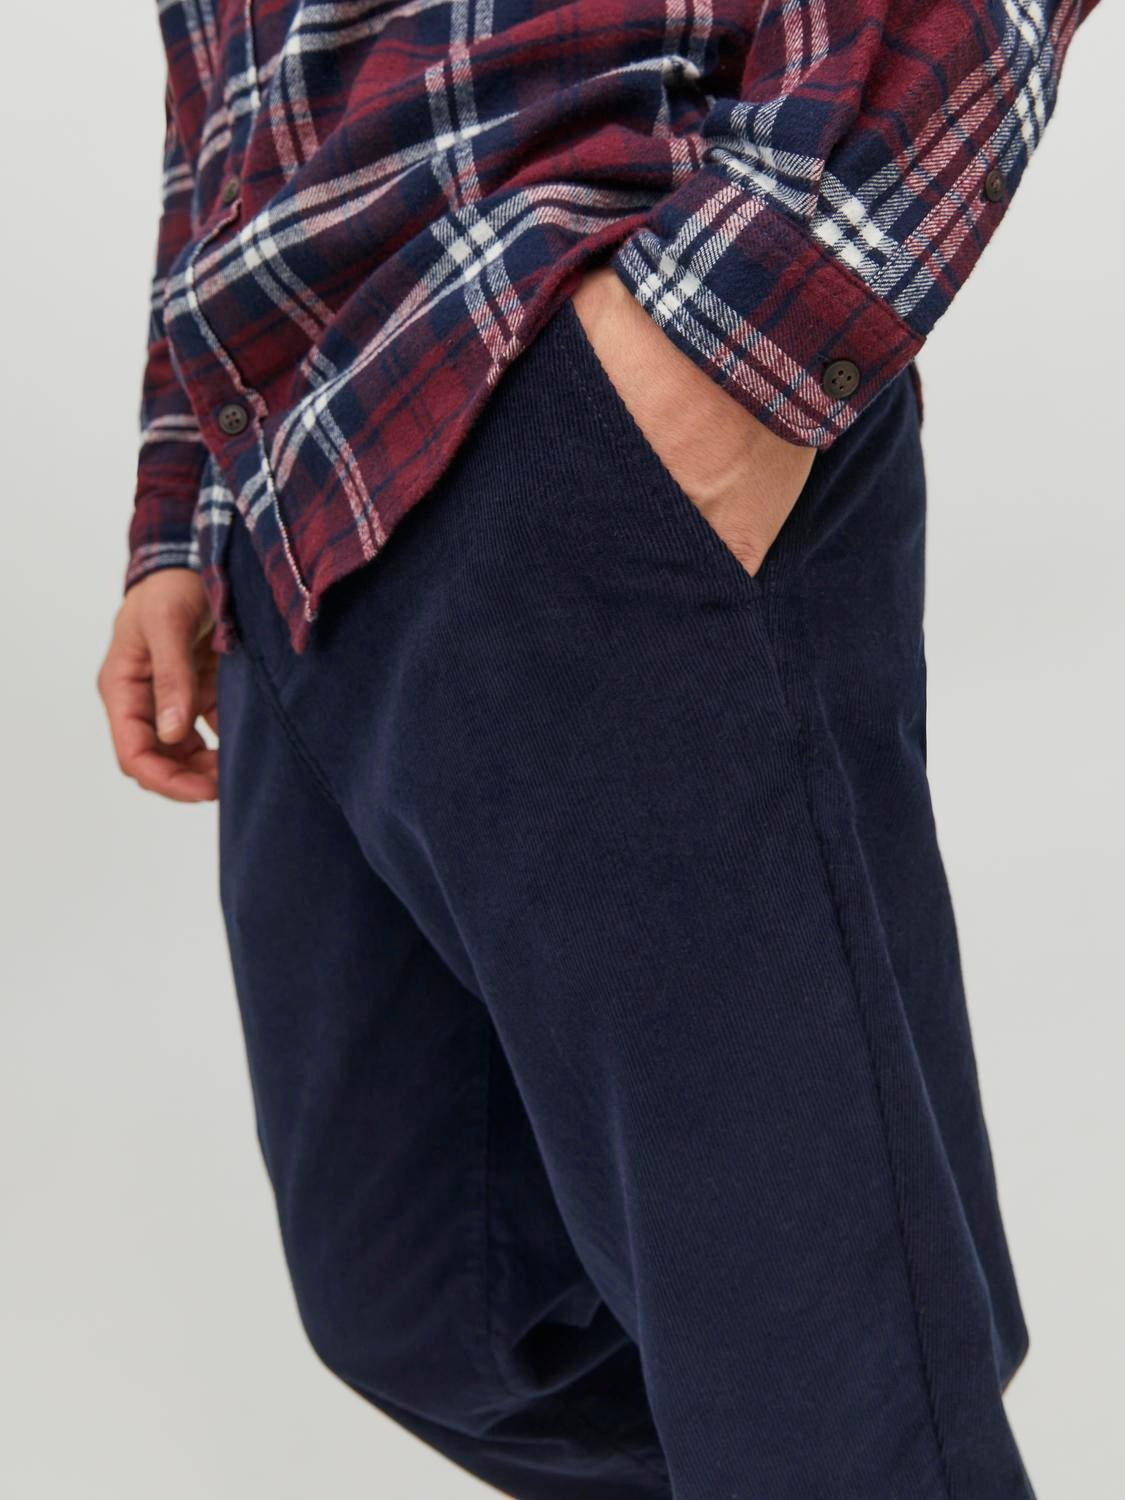 Jack & Jones Loose Fit Chino trousers -Navy Blazer - 12237547